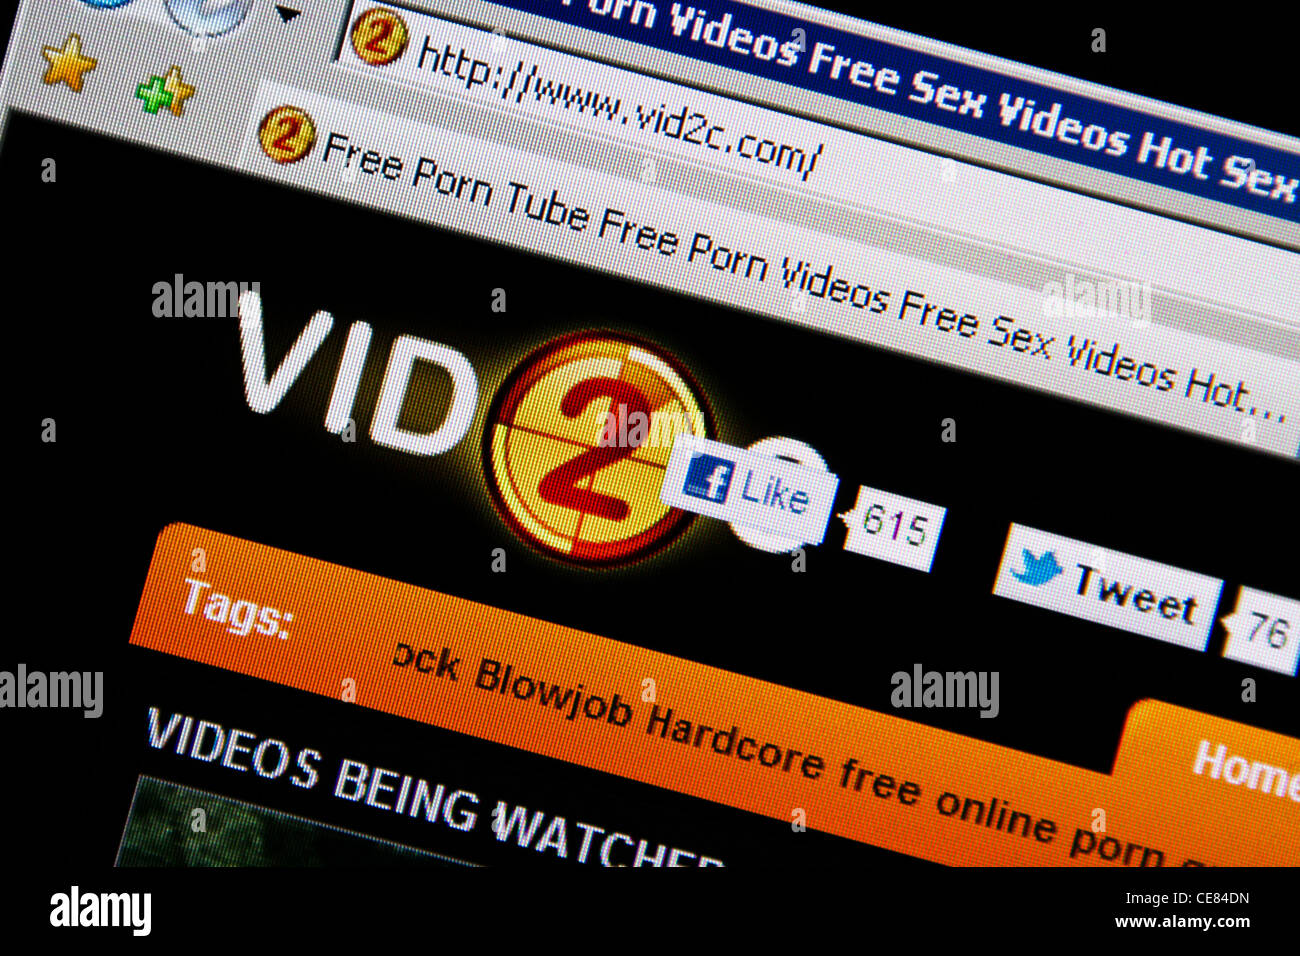 sex video movie online website vid2c Stock Photo pic